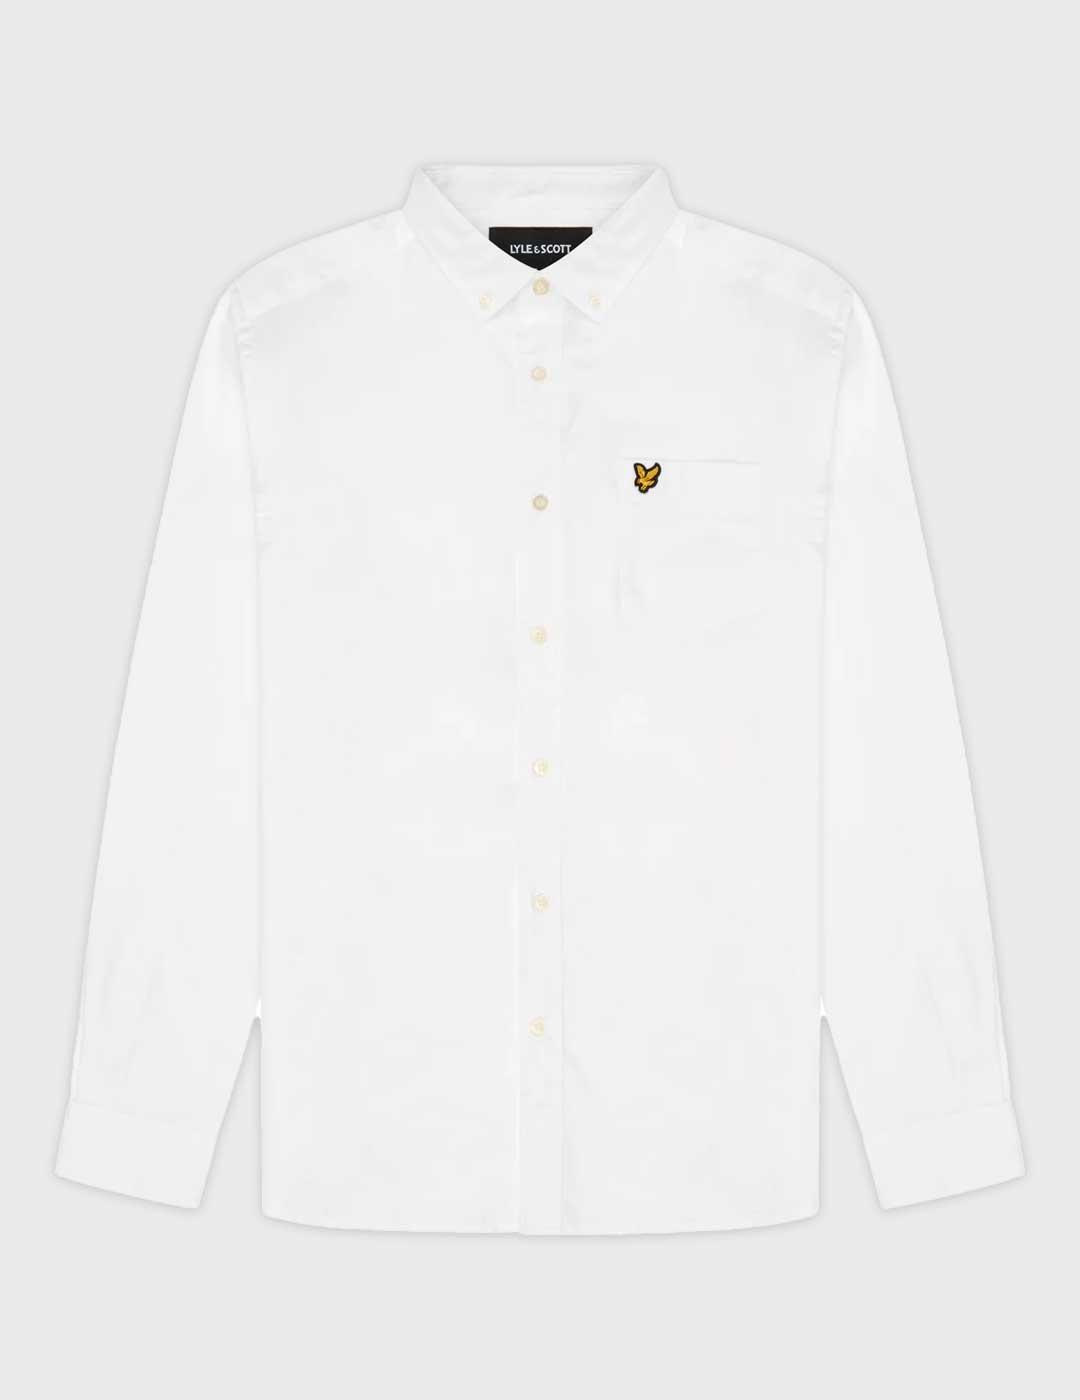 Lyle & Scott Oxford Shirt Camisa blancapara hombre